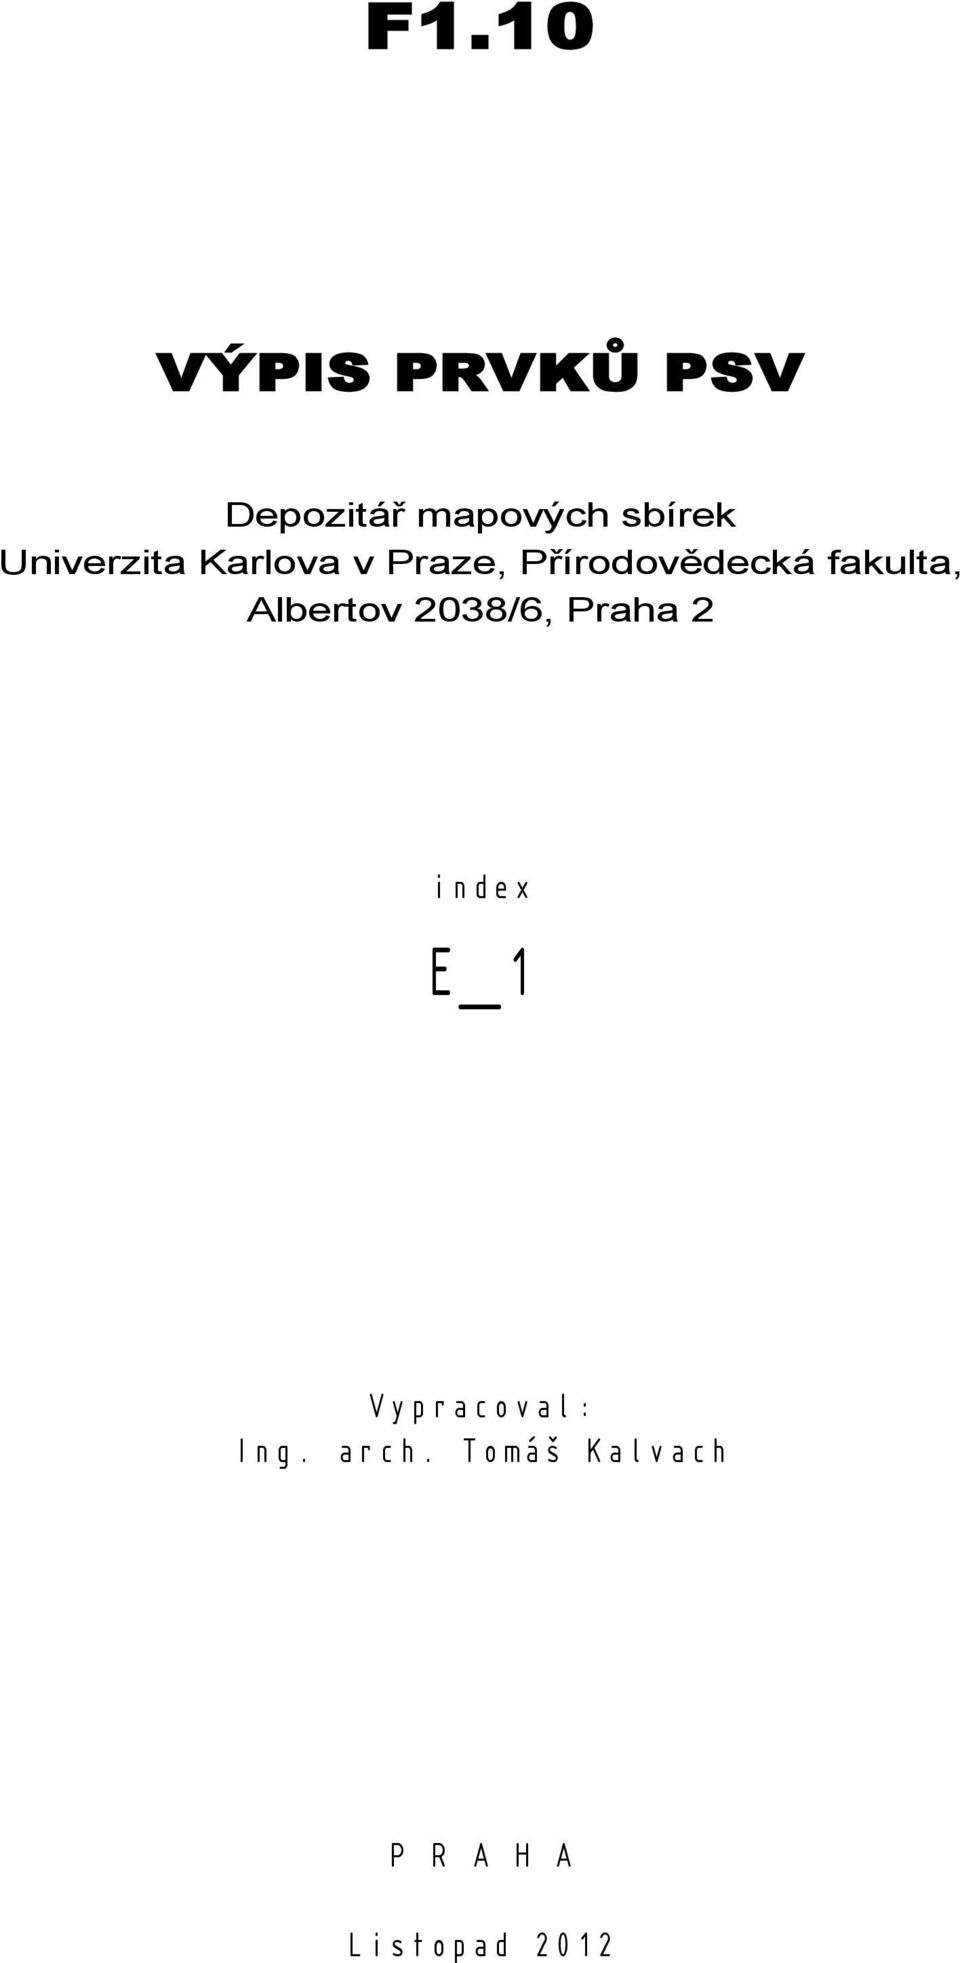 fakulta, Albertov 2038/6, Praha 2 index E_1